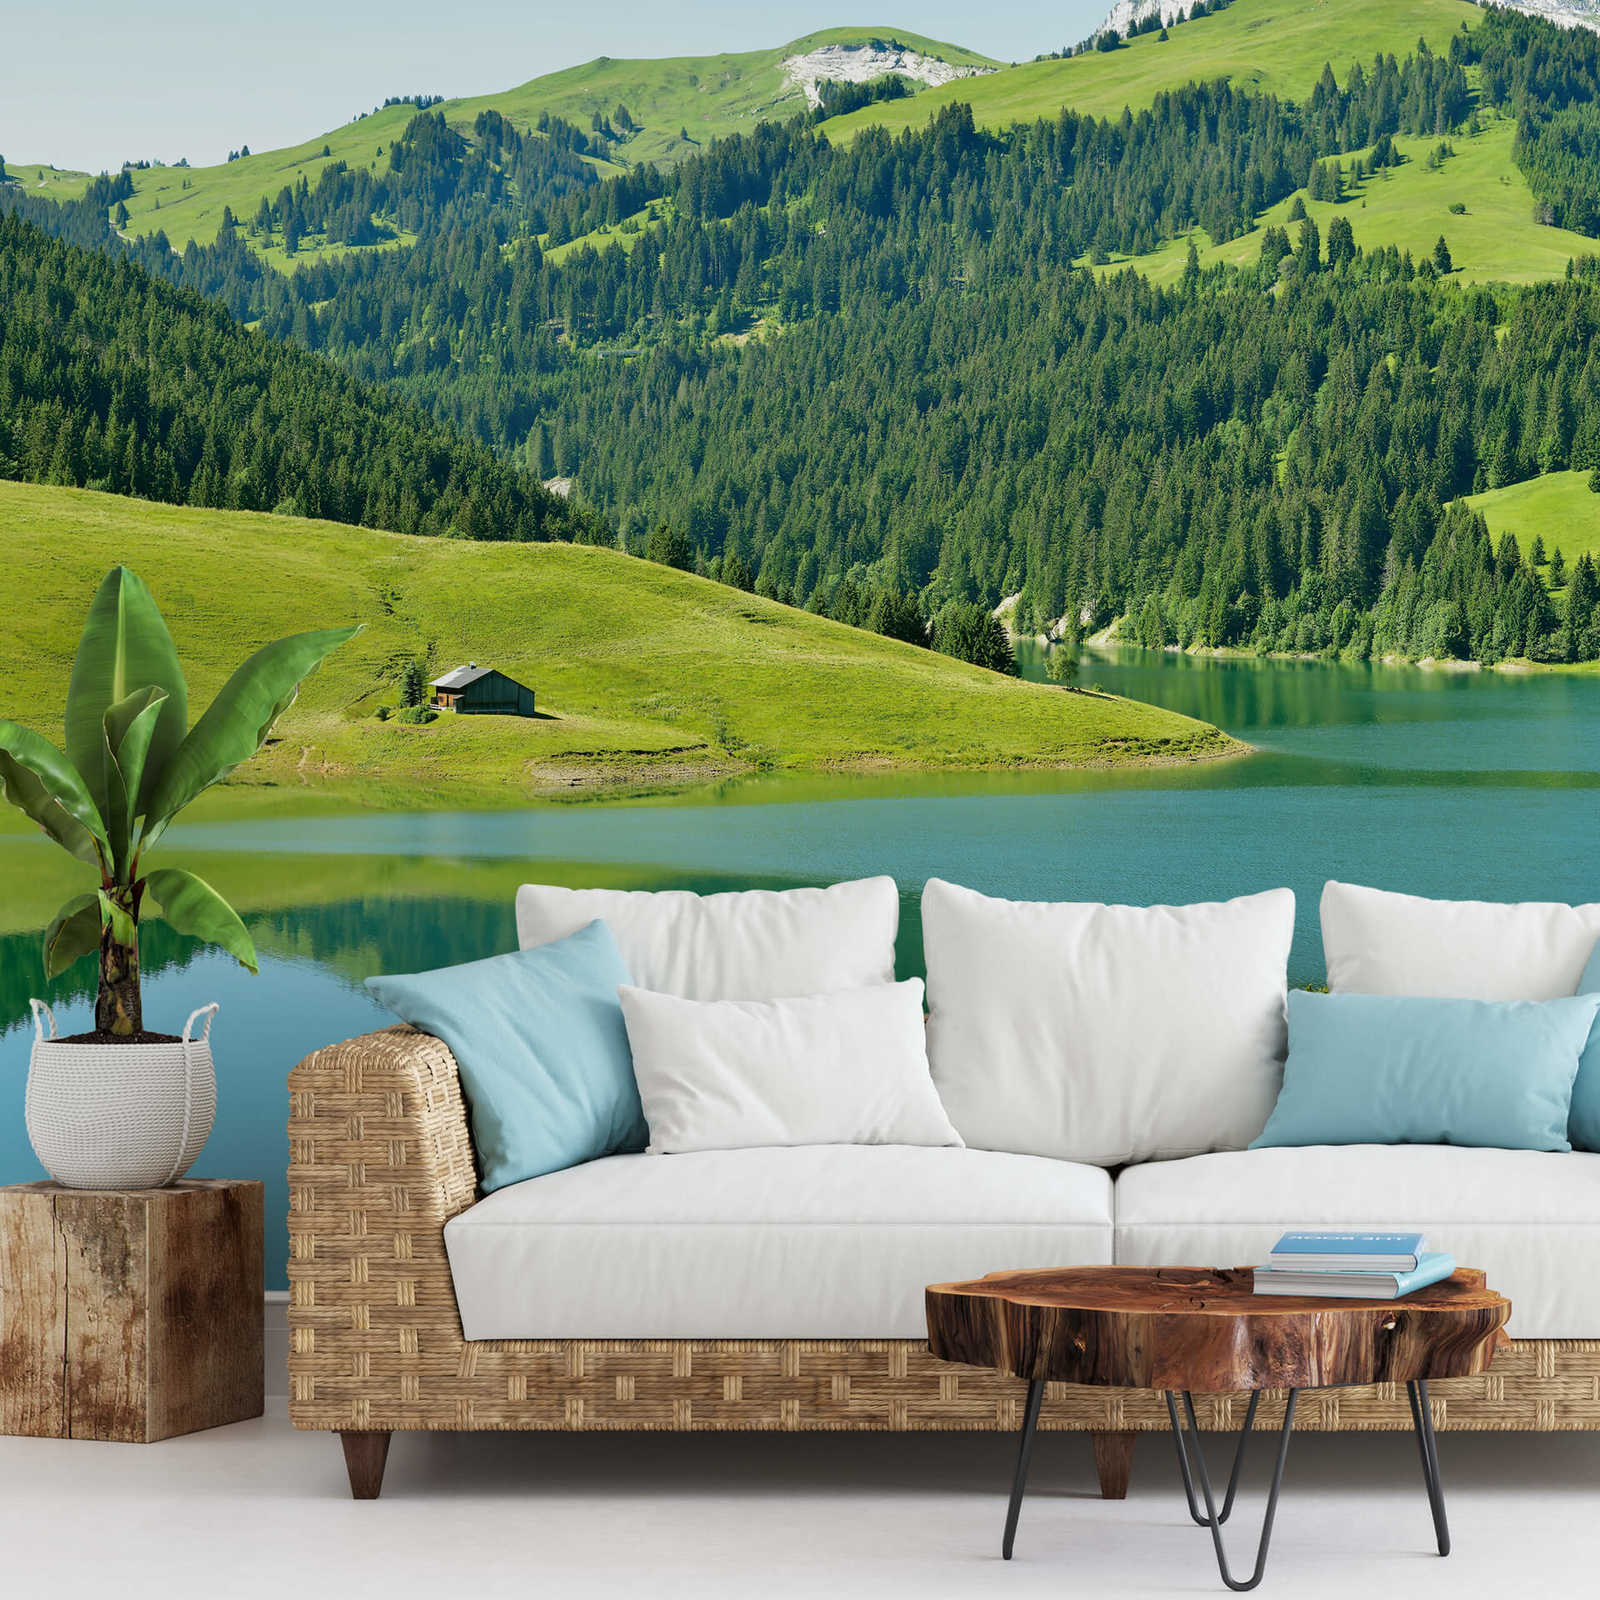             Fotomurali Montagna con lago in Svizzera - Verde, Blu, Grigio
        